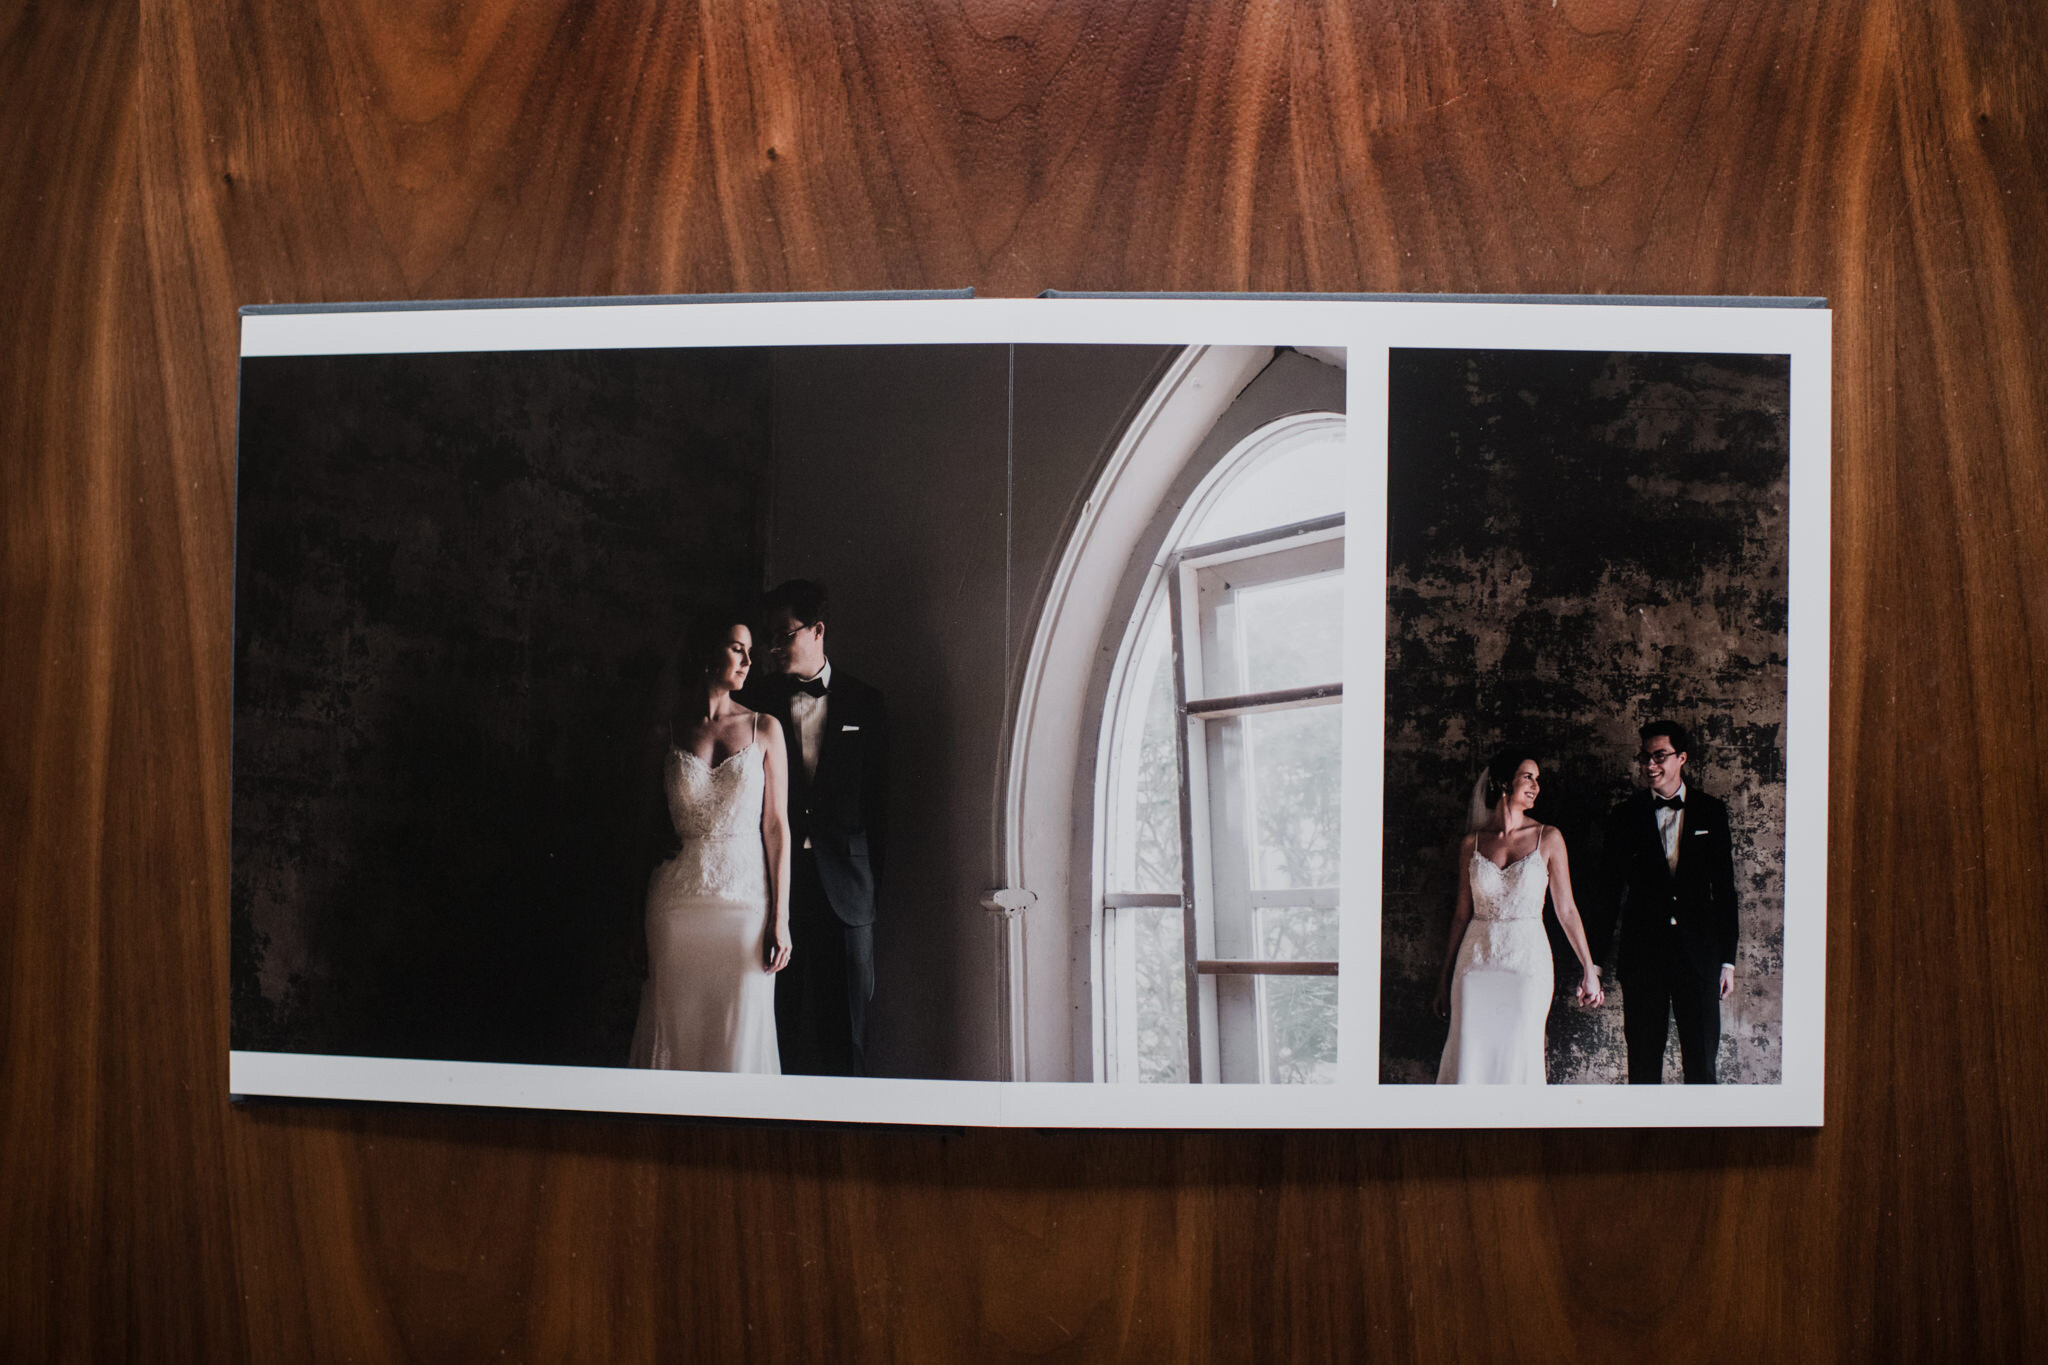 931-wedding-photographer-toronto-kingston-albums-dekora.jpg